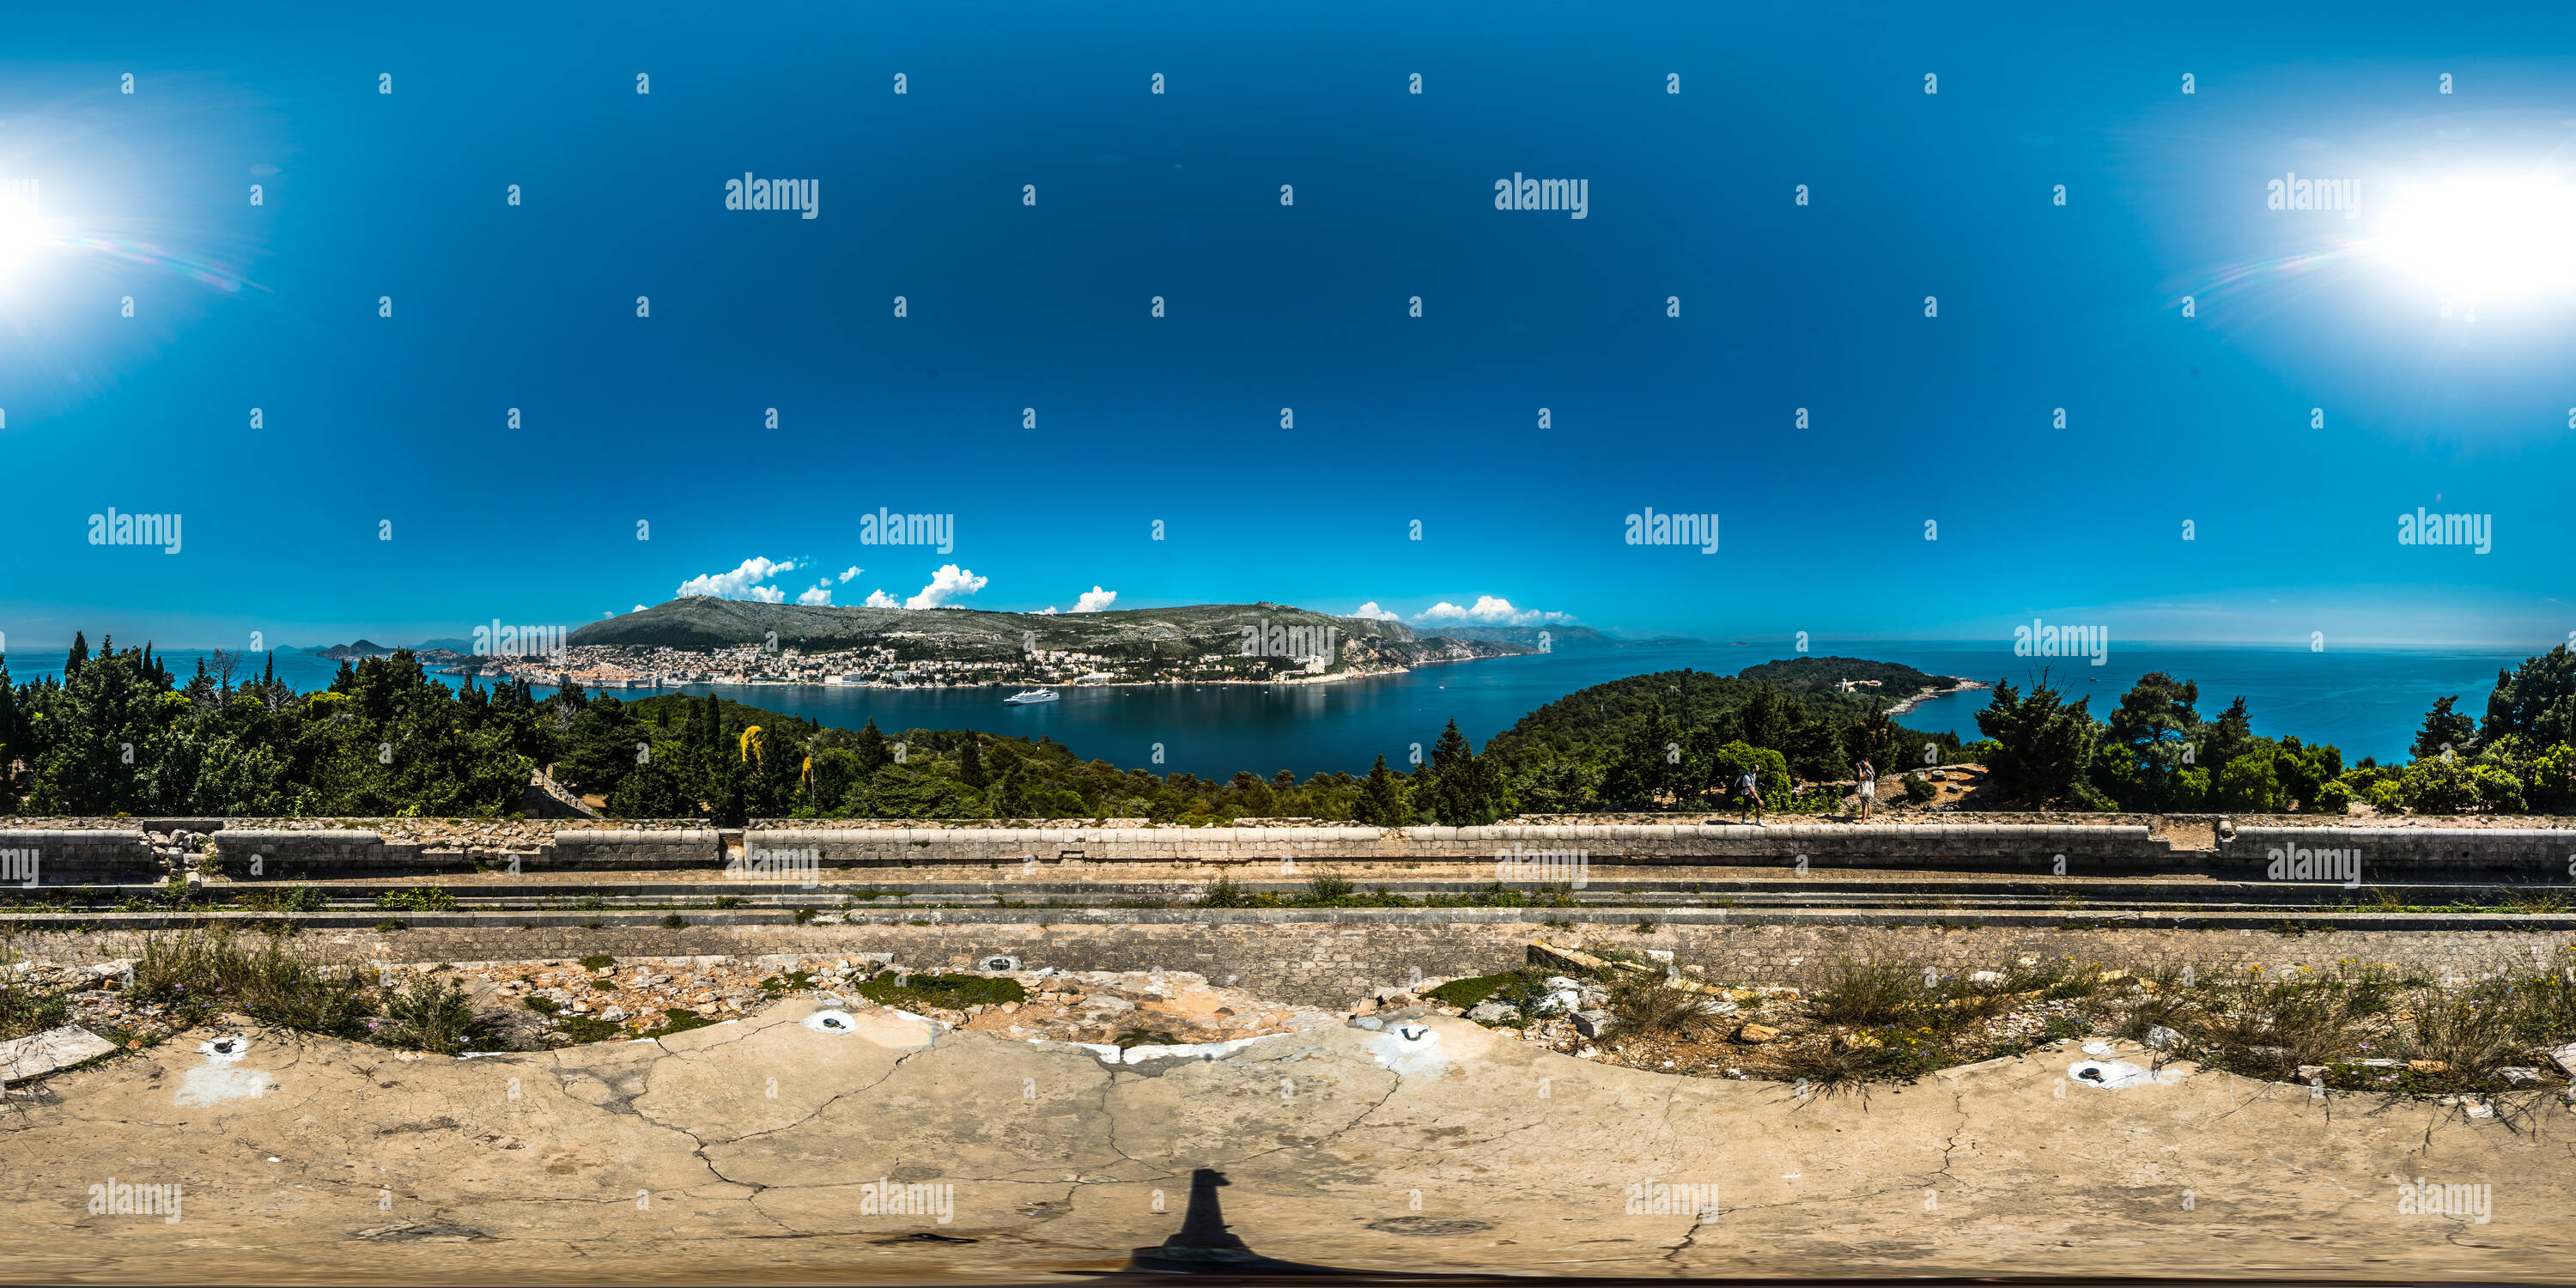 Turisticka Zajednica Grada Dubrovnika Fotos Und Bildmaterial In Hoher Aufl Sung Alamy